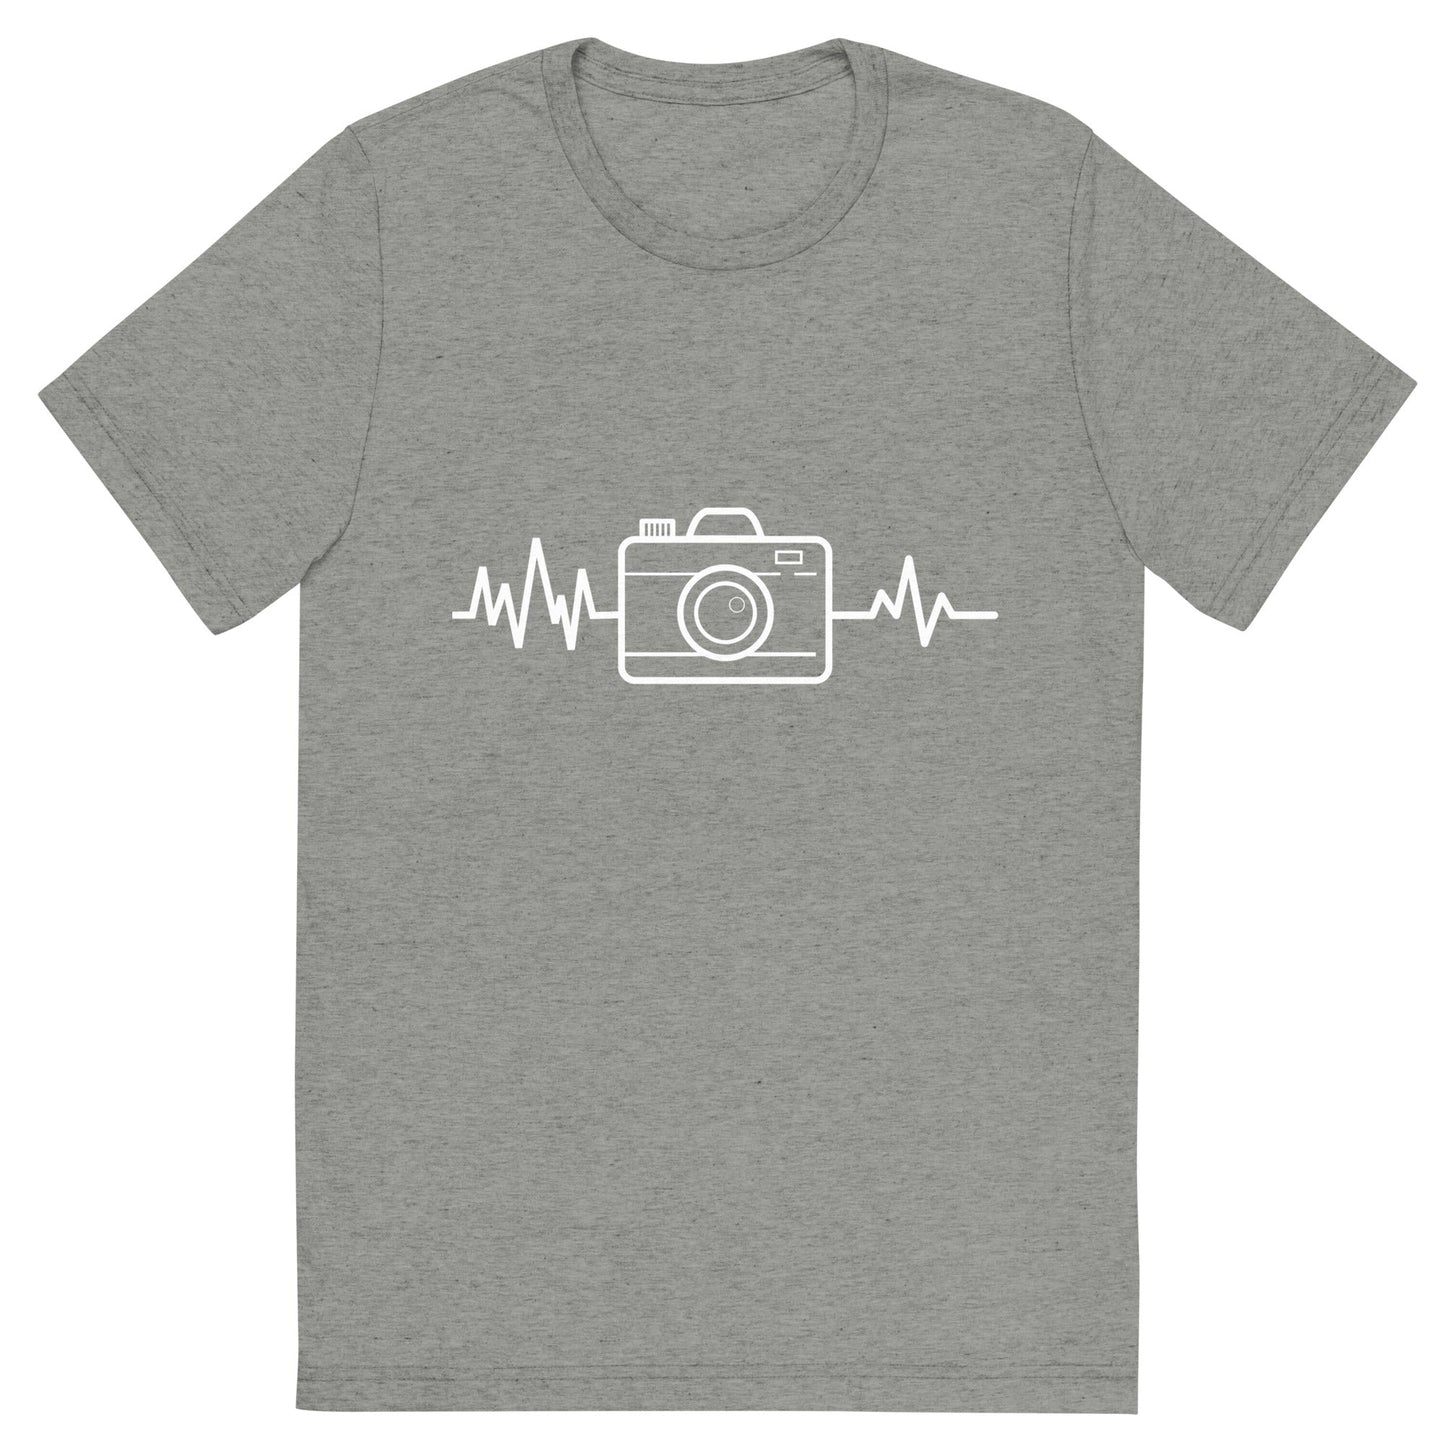 Camera Heartbeat Shirt, Gift for Photographer, Photographer Short Sleeve T-Shirt, Camera Shirt, Photographer Gift, Photographer T-Shirts, Heartbeat TeeShirt - ShopJeanPhotography.com